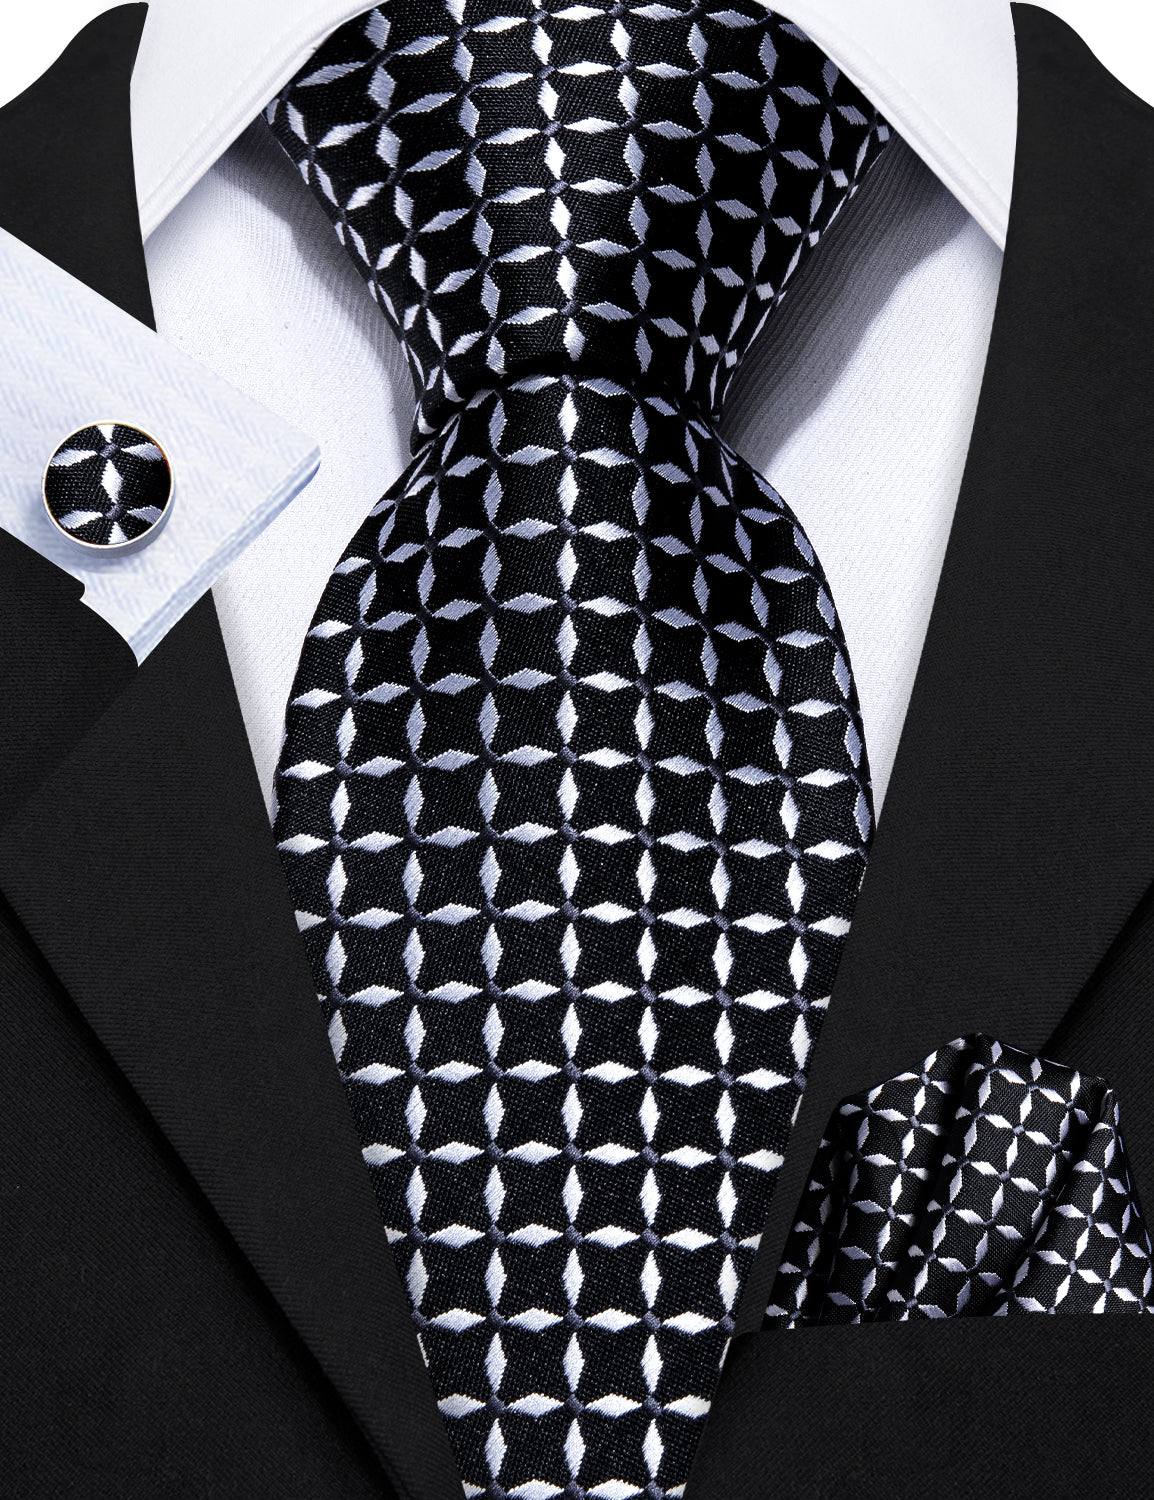 Barry.wang Black Tie White Plaid Silk Tie Pocket Square Cufflinks Set